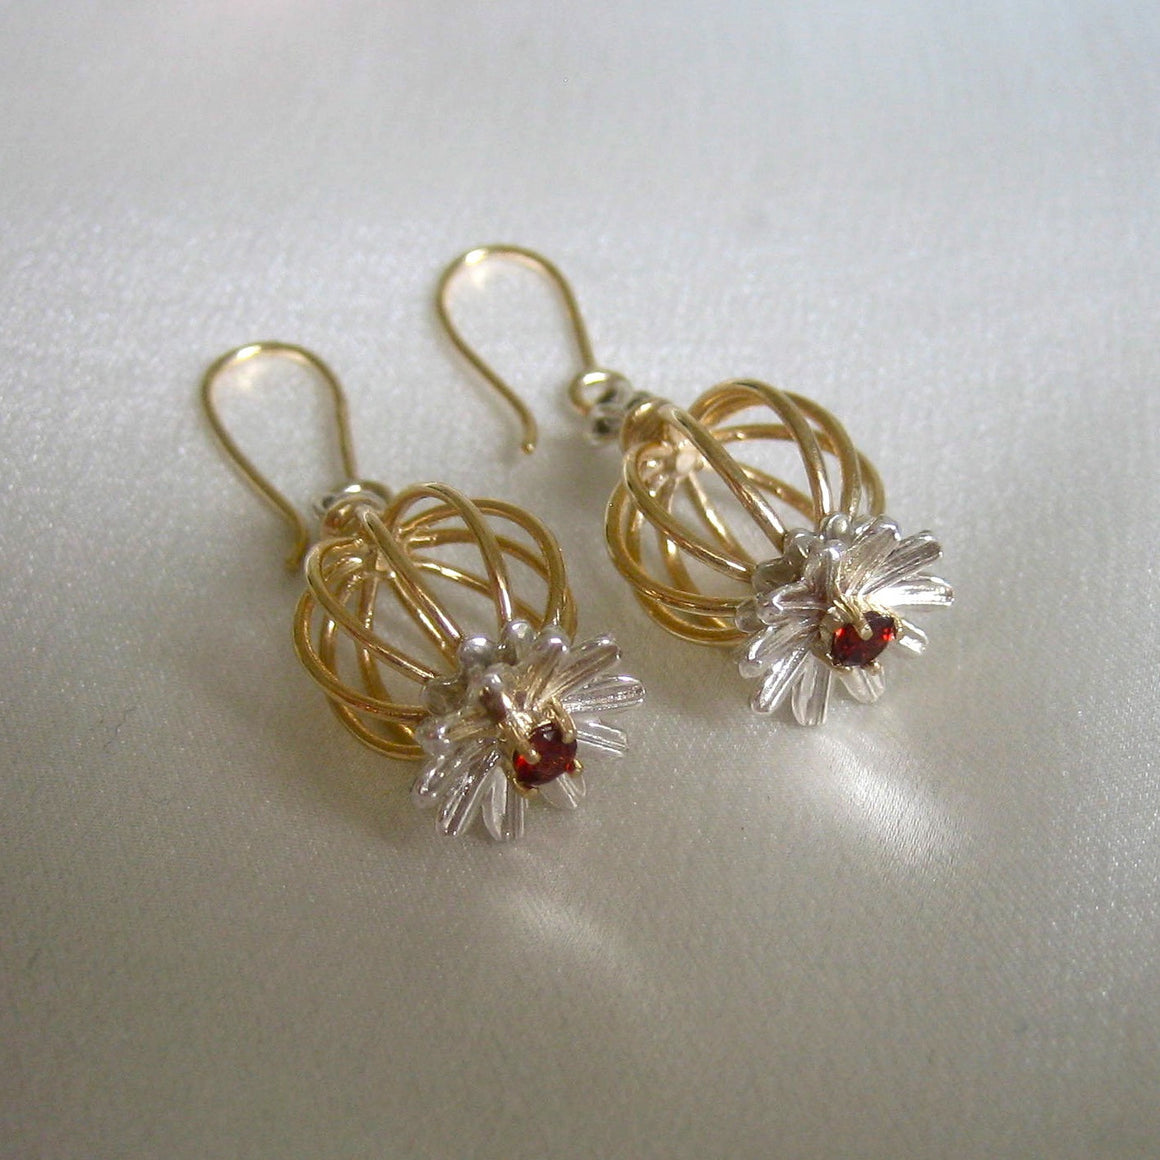 Earrings - Gold And Silver Poppy Earrings With Garnets